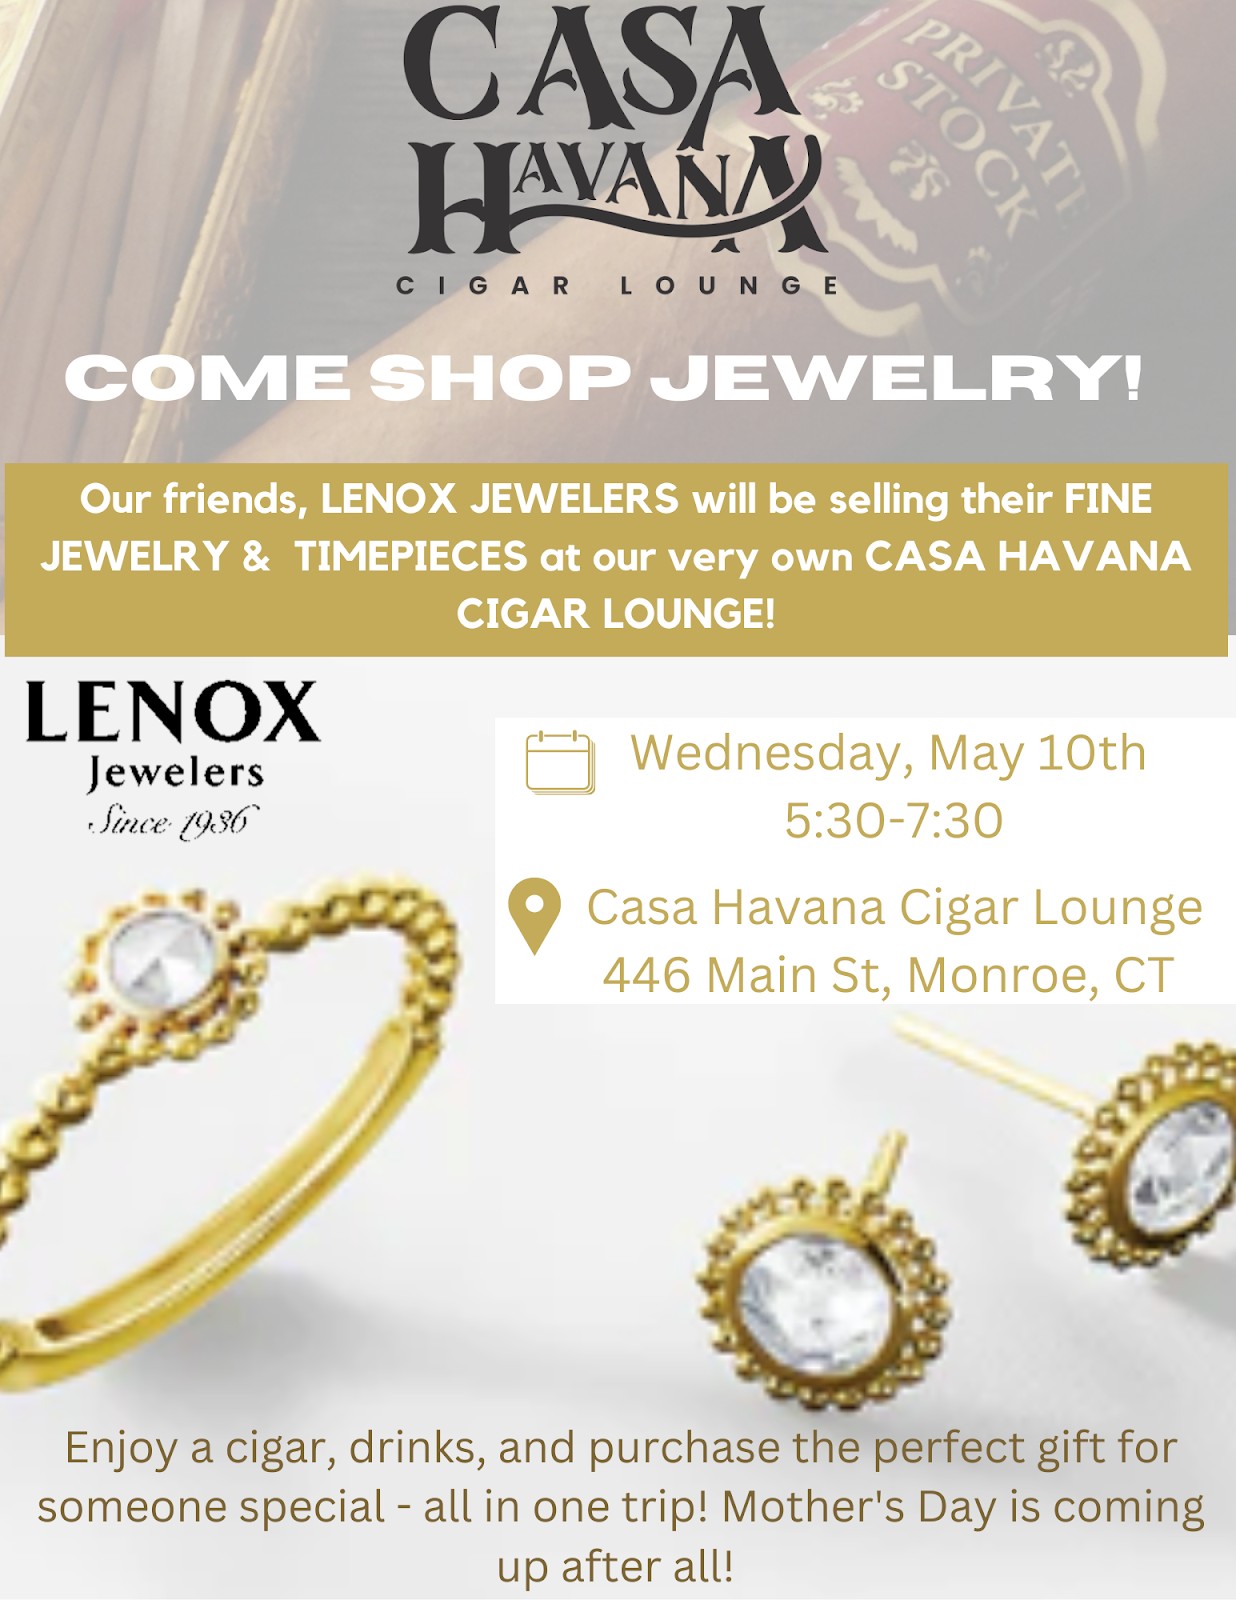 Casa Havana and Lenox Jewelers